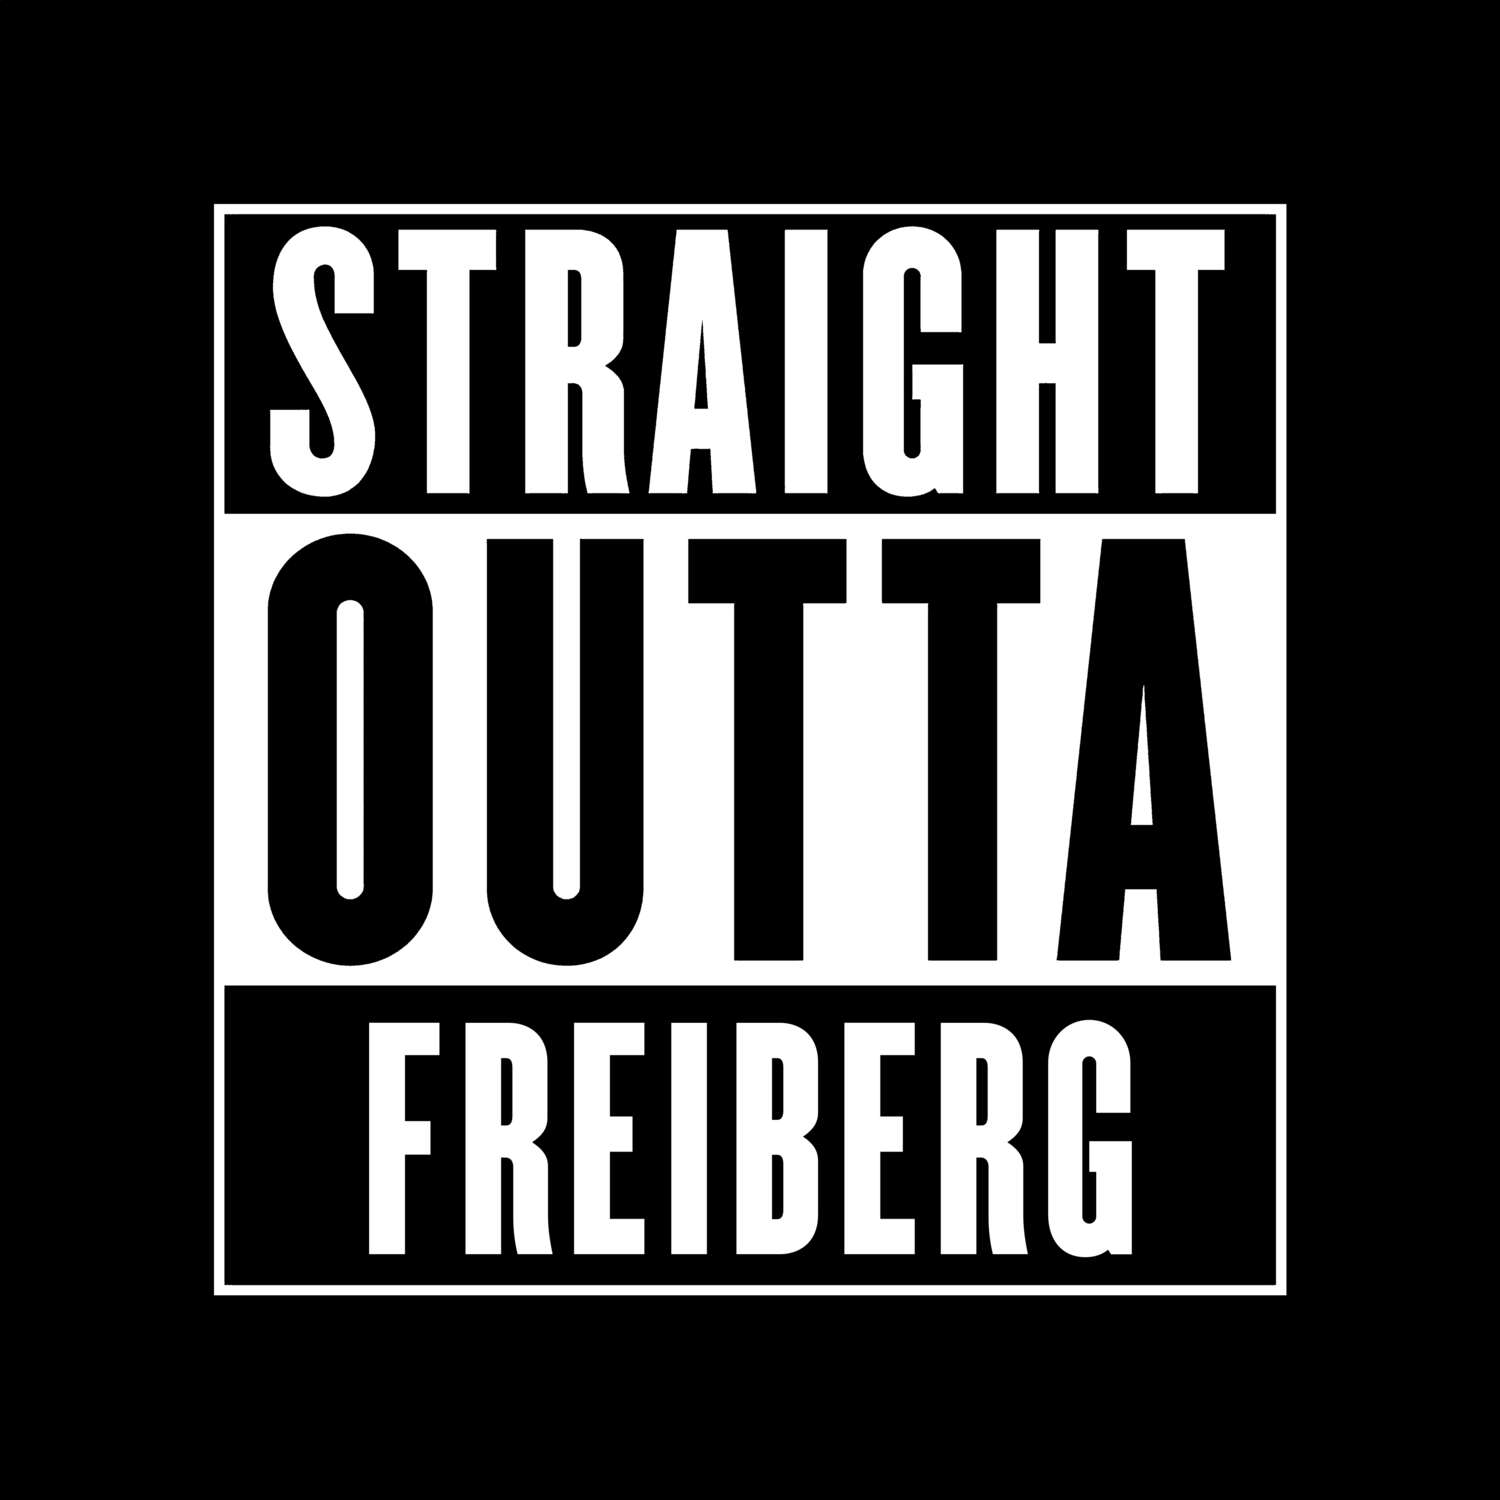 Freiberg T-Shirt »Straight Outta«